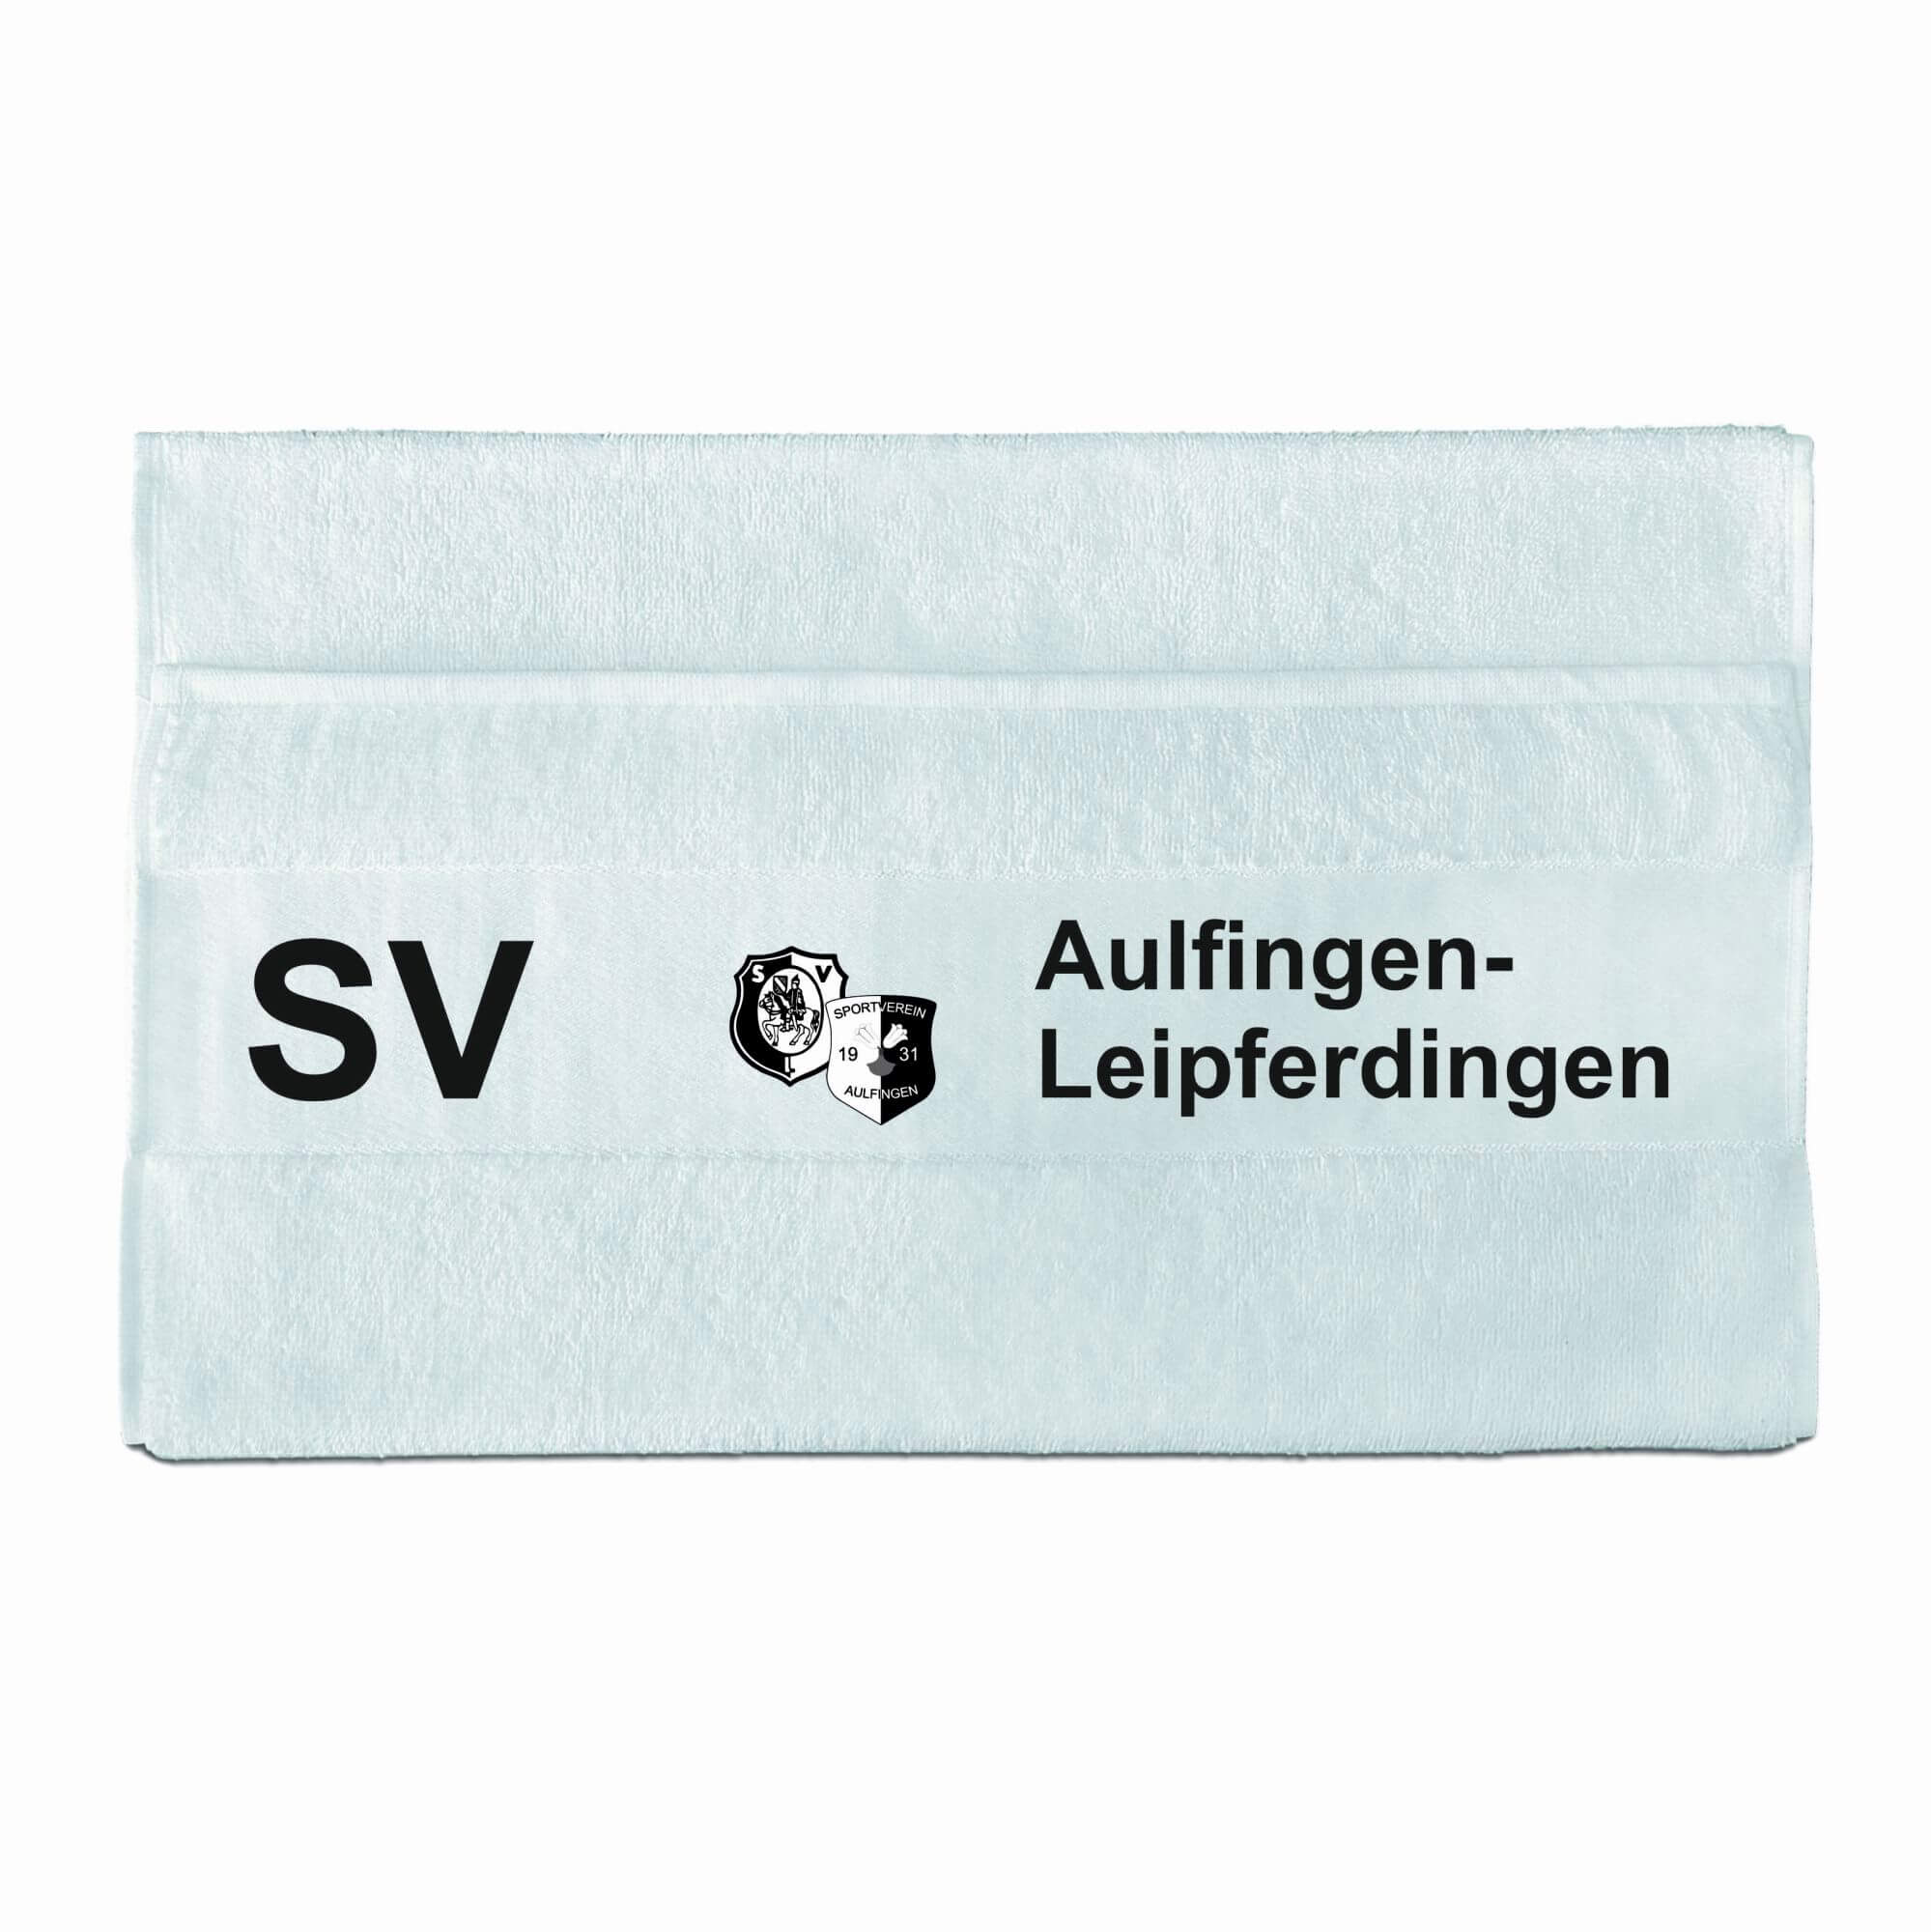 Walkfrottier-Handtuch SV Aulfingen-Leipferdingen weiß 67x140cm